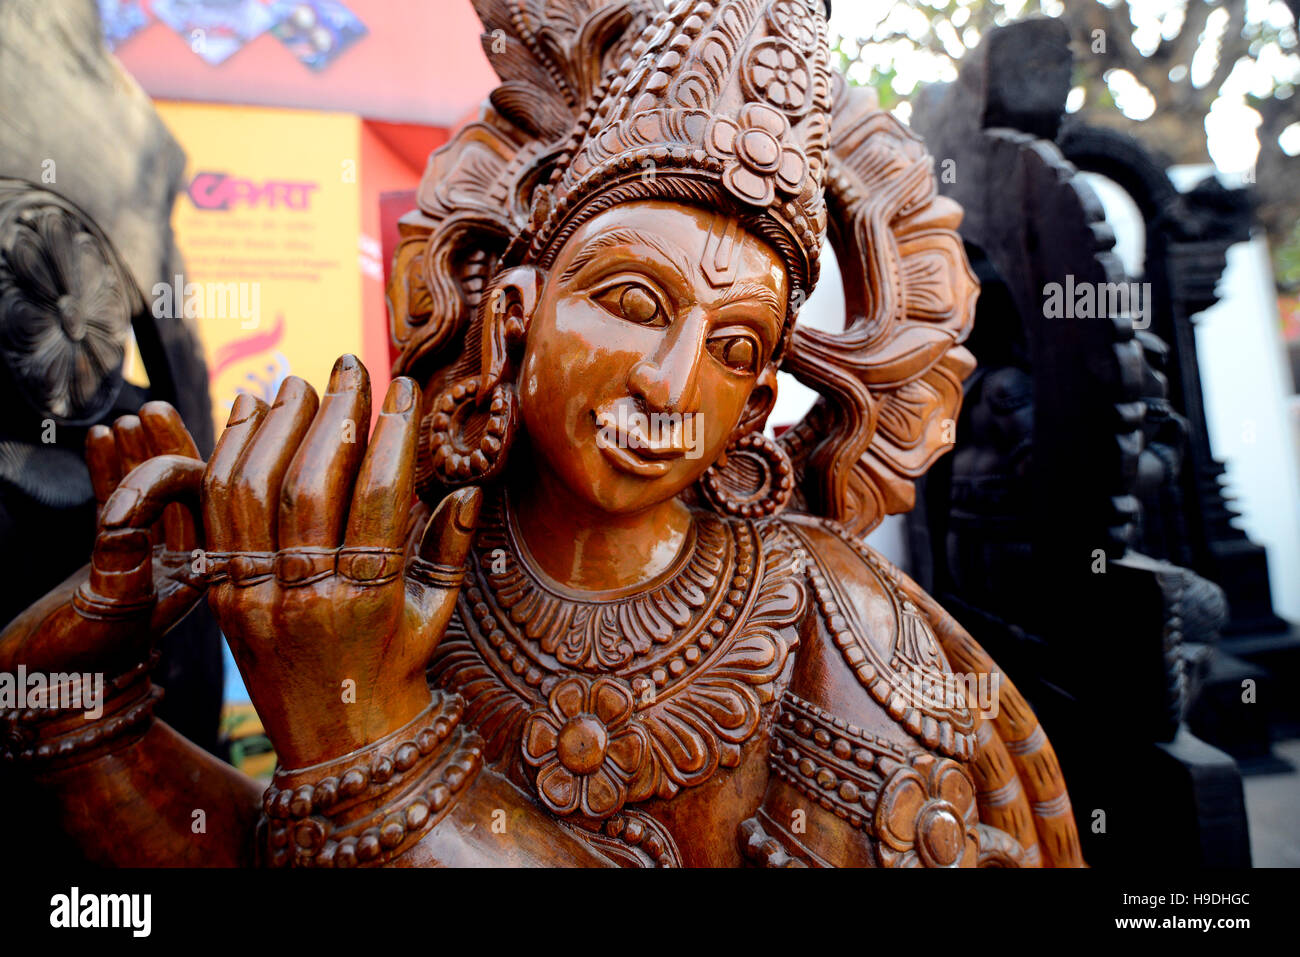 Dancing Shiva sculpture Stock Photo